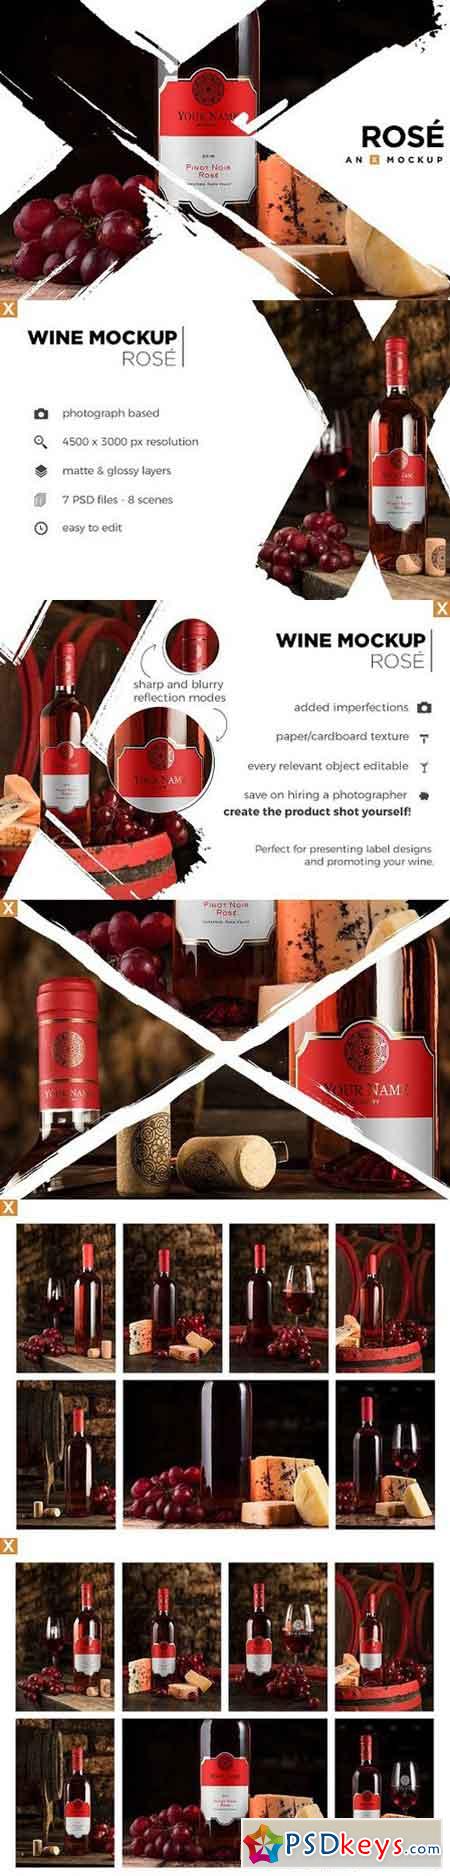 Cellar Wine Mockup - Bordeaux Rose 1407461